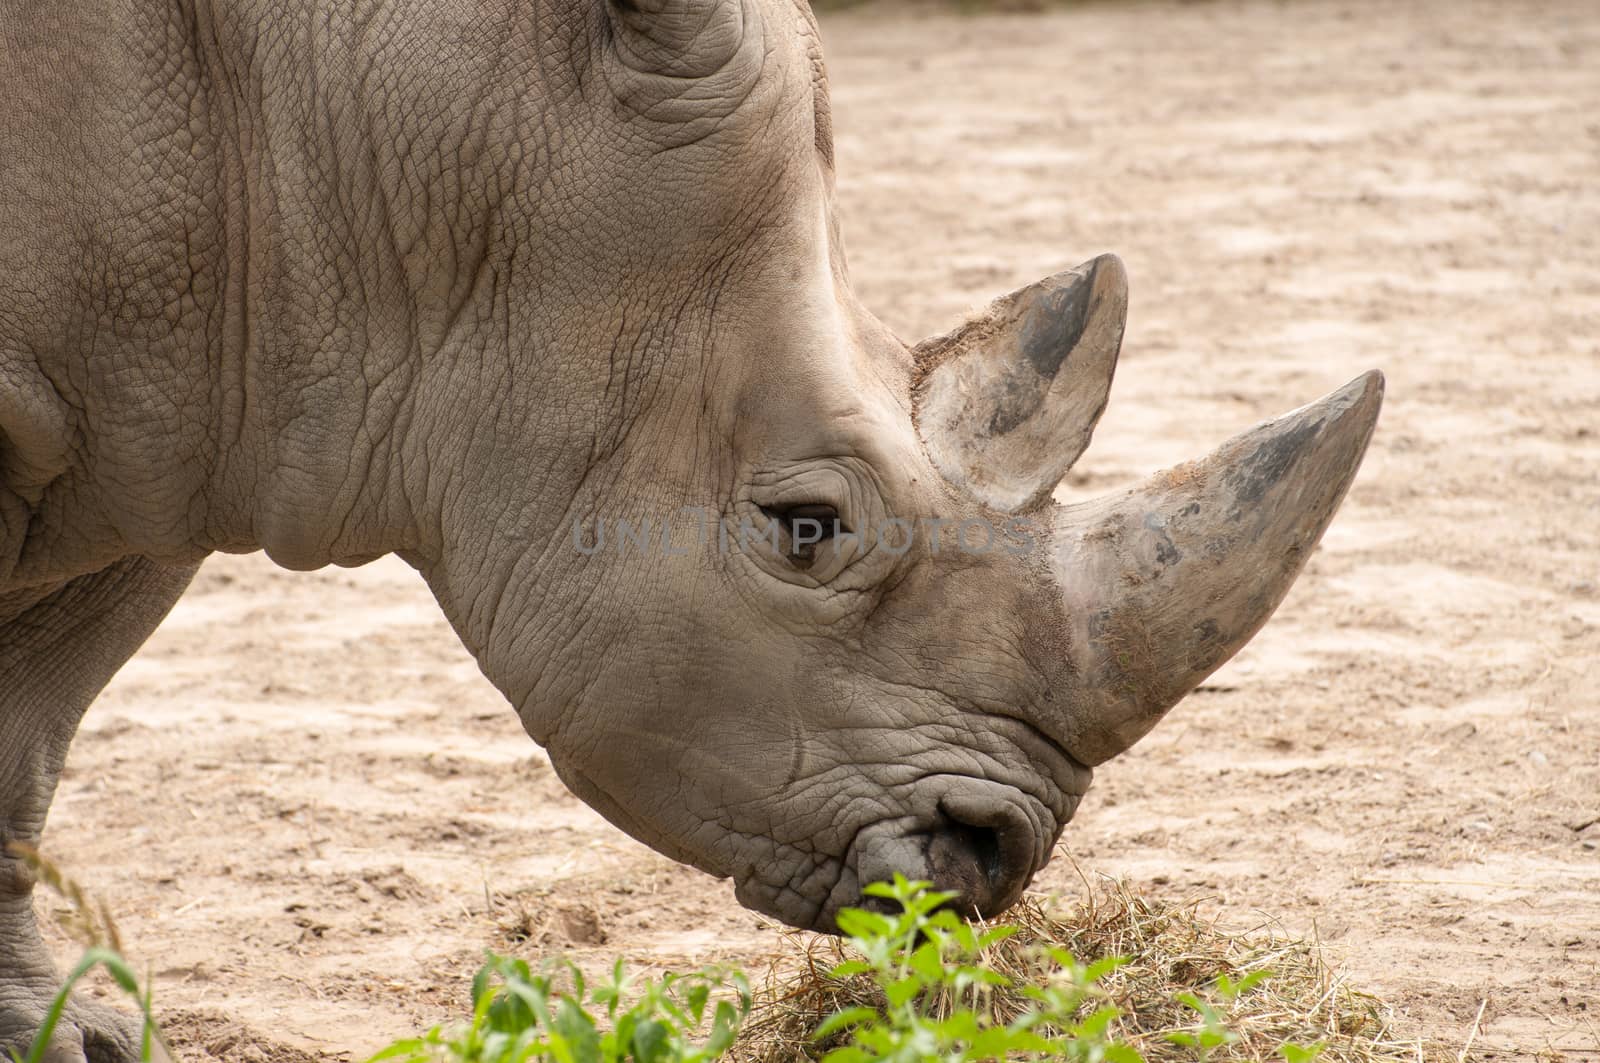 Rhino eating leaves by daoleduc